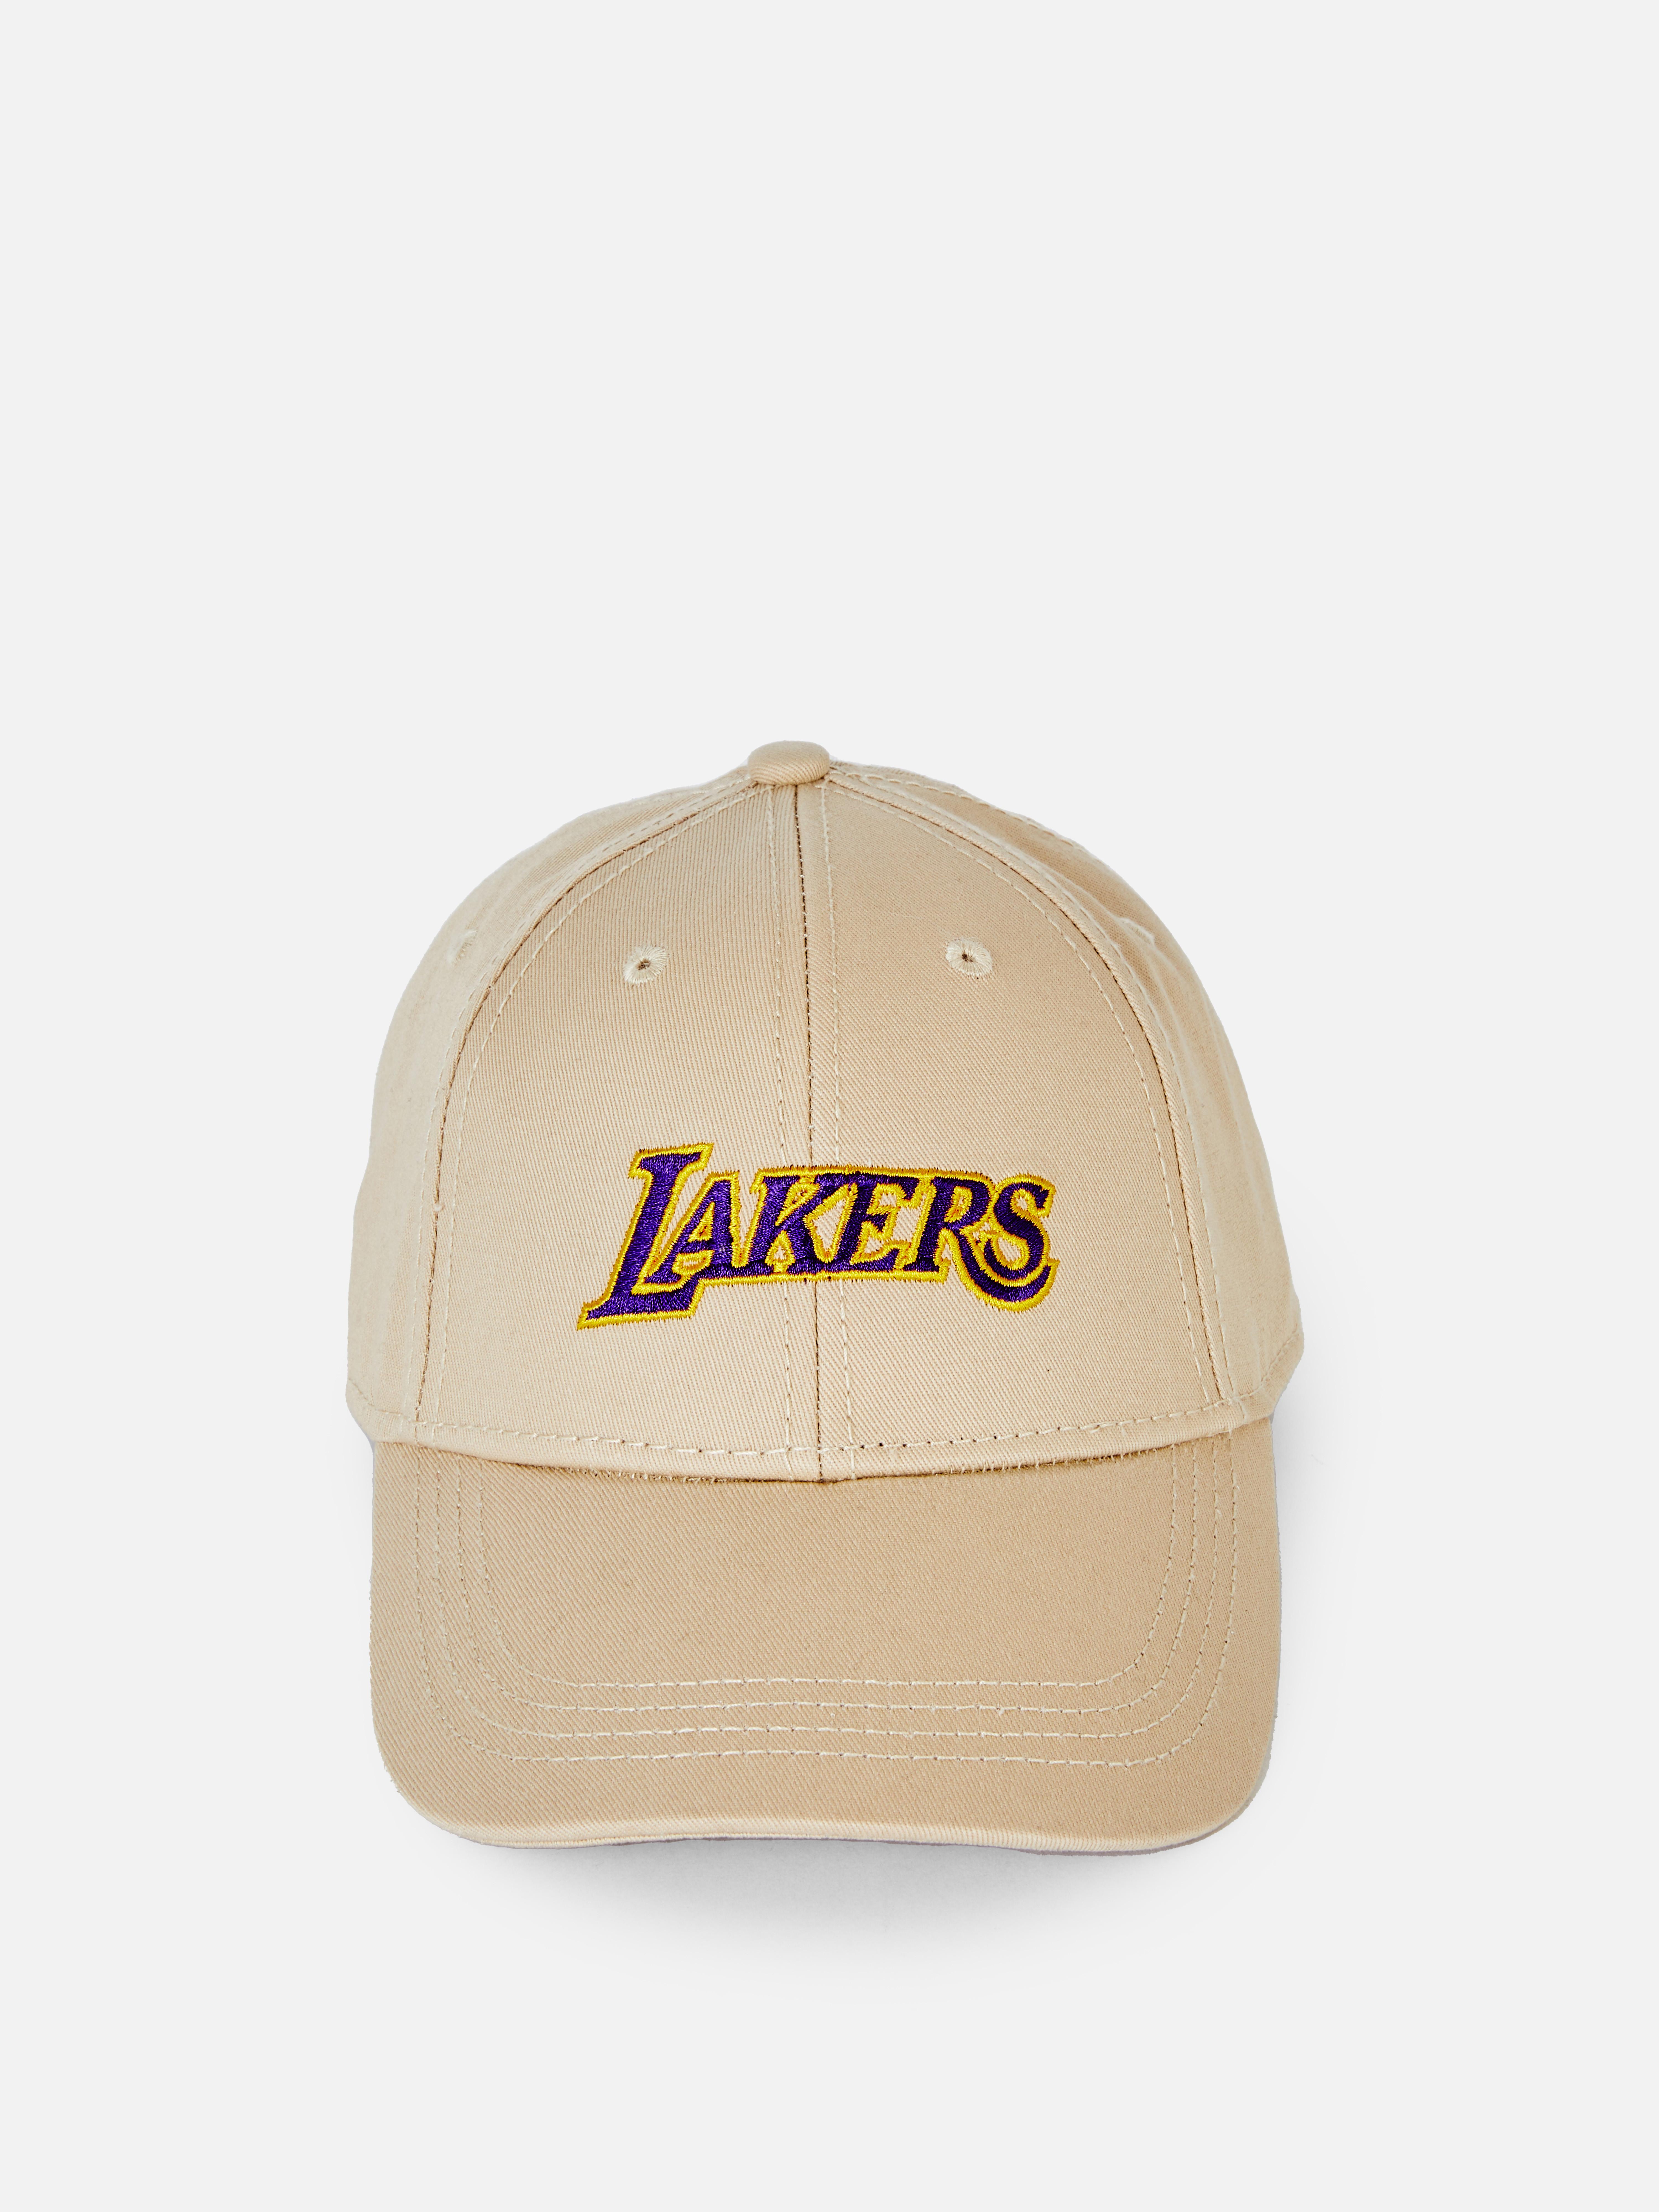 NBA Los Angeles Lakers Youth Cap